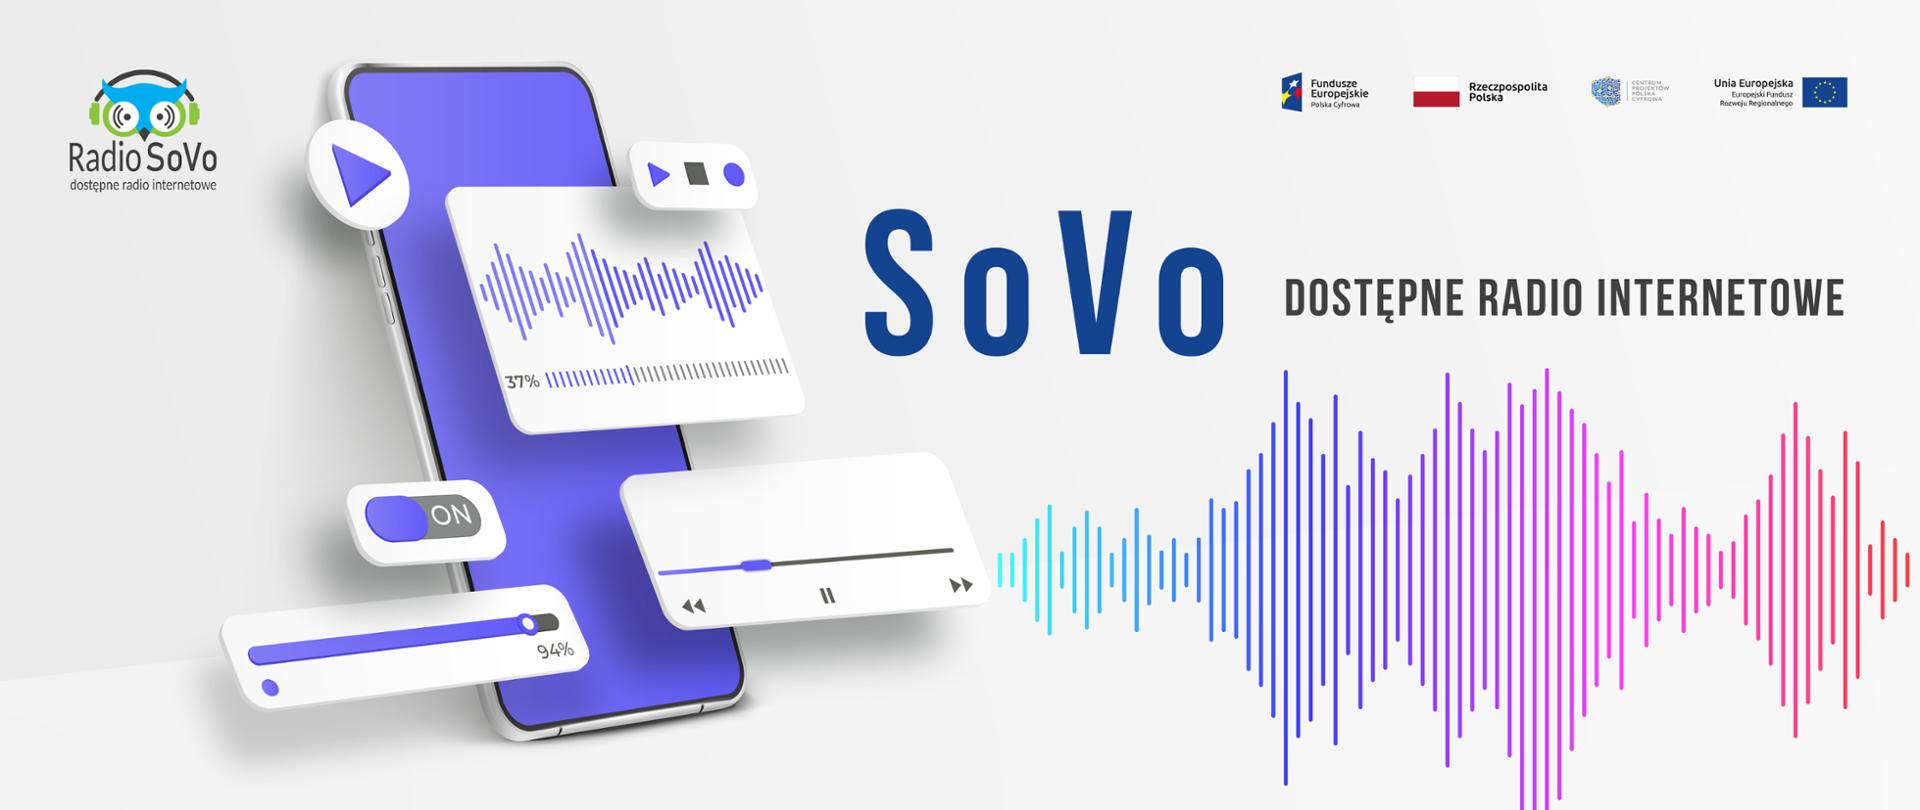 SoVo - dostępne radio internetowe